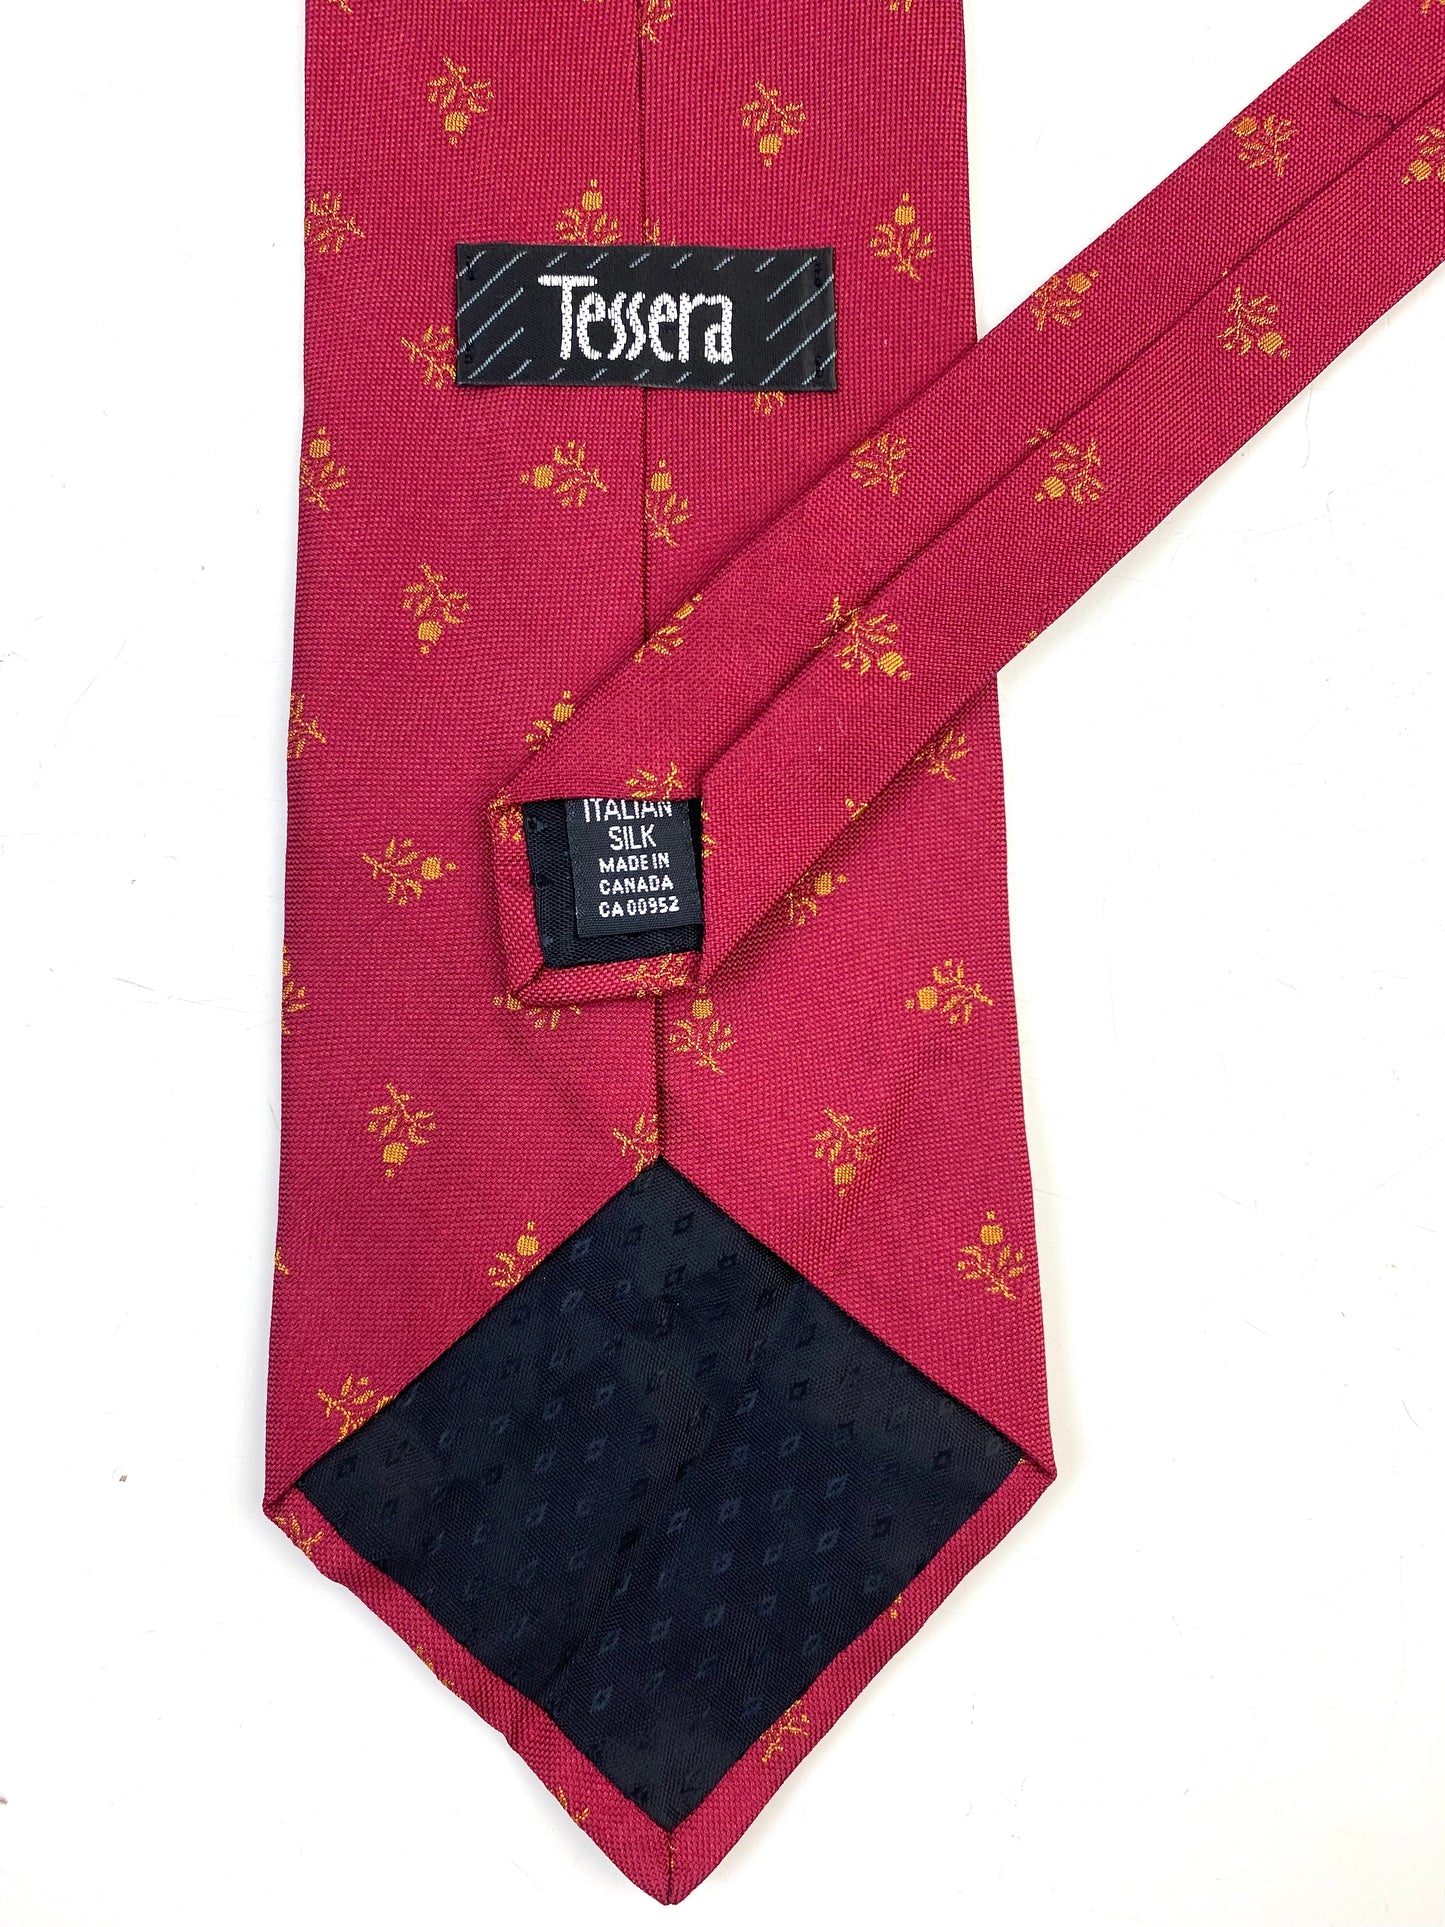 90s Deadstock Silk Necktie, Men's Vintage Wine/ Gold Micro Floral  Pattern Tie, NOS